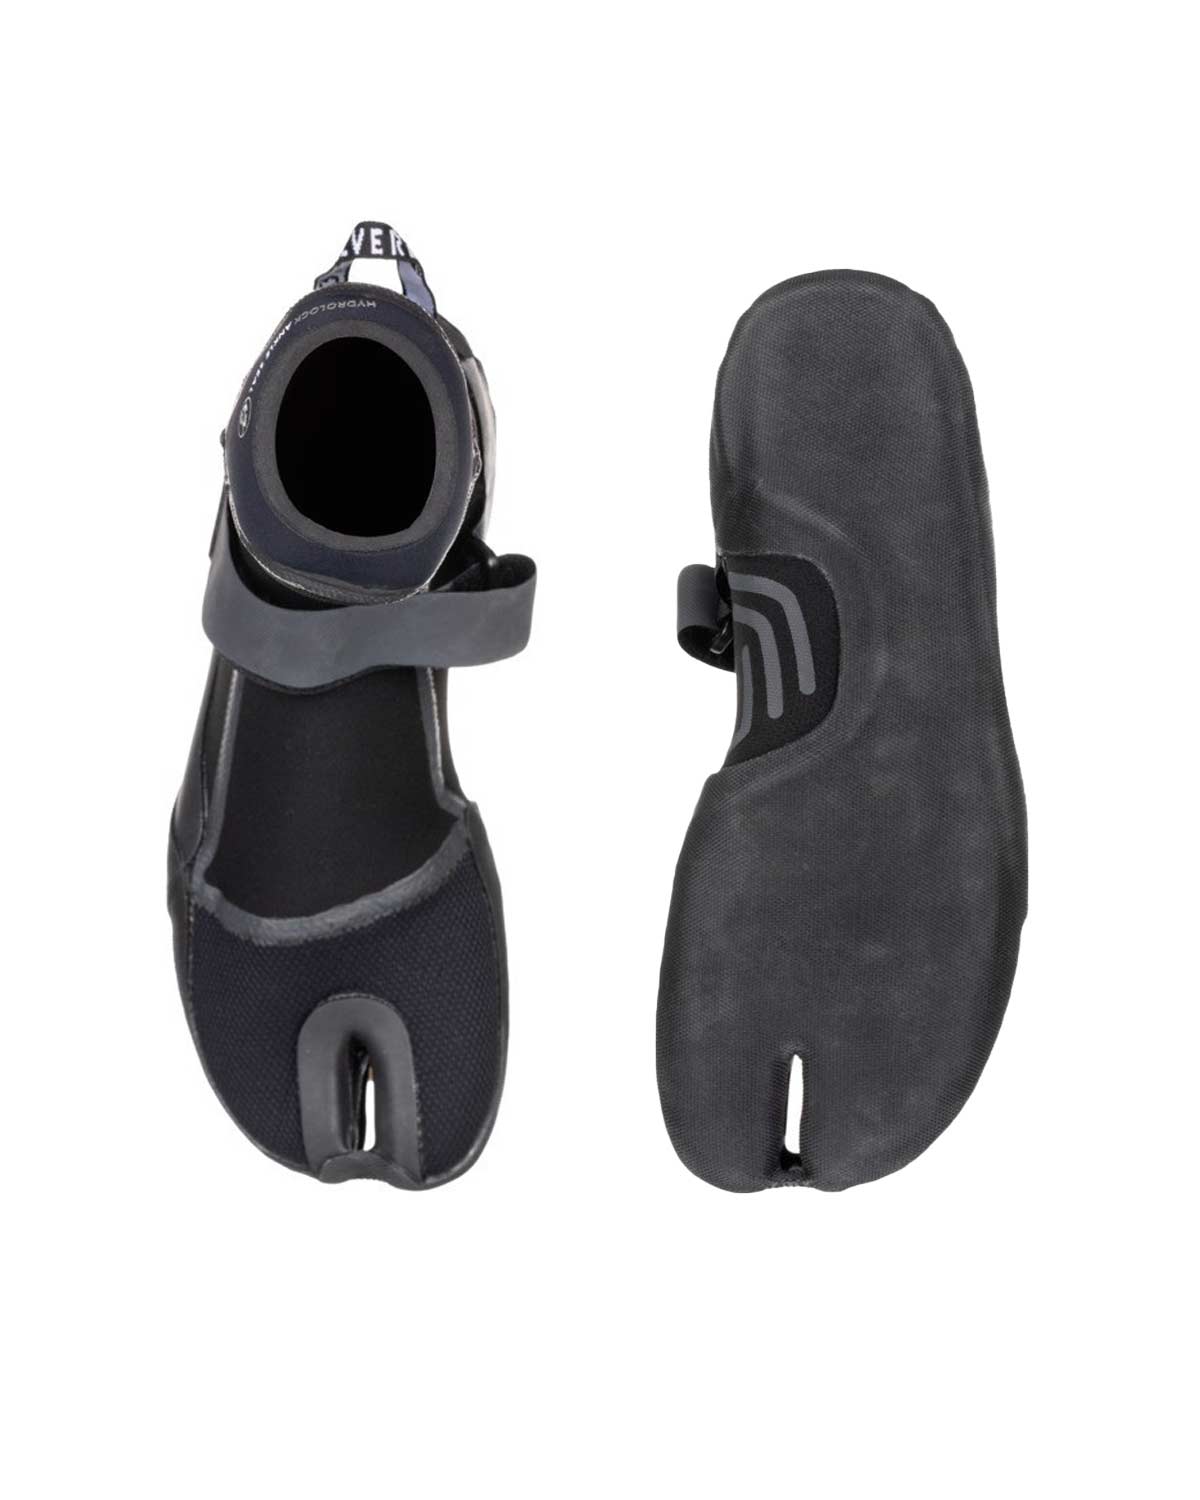 5mm Quiksilver MARATHON SESSIONS Boots | Wetsuit Wearhouse